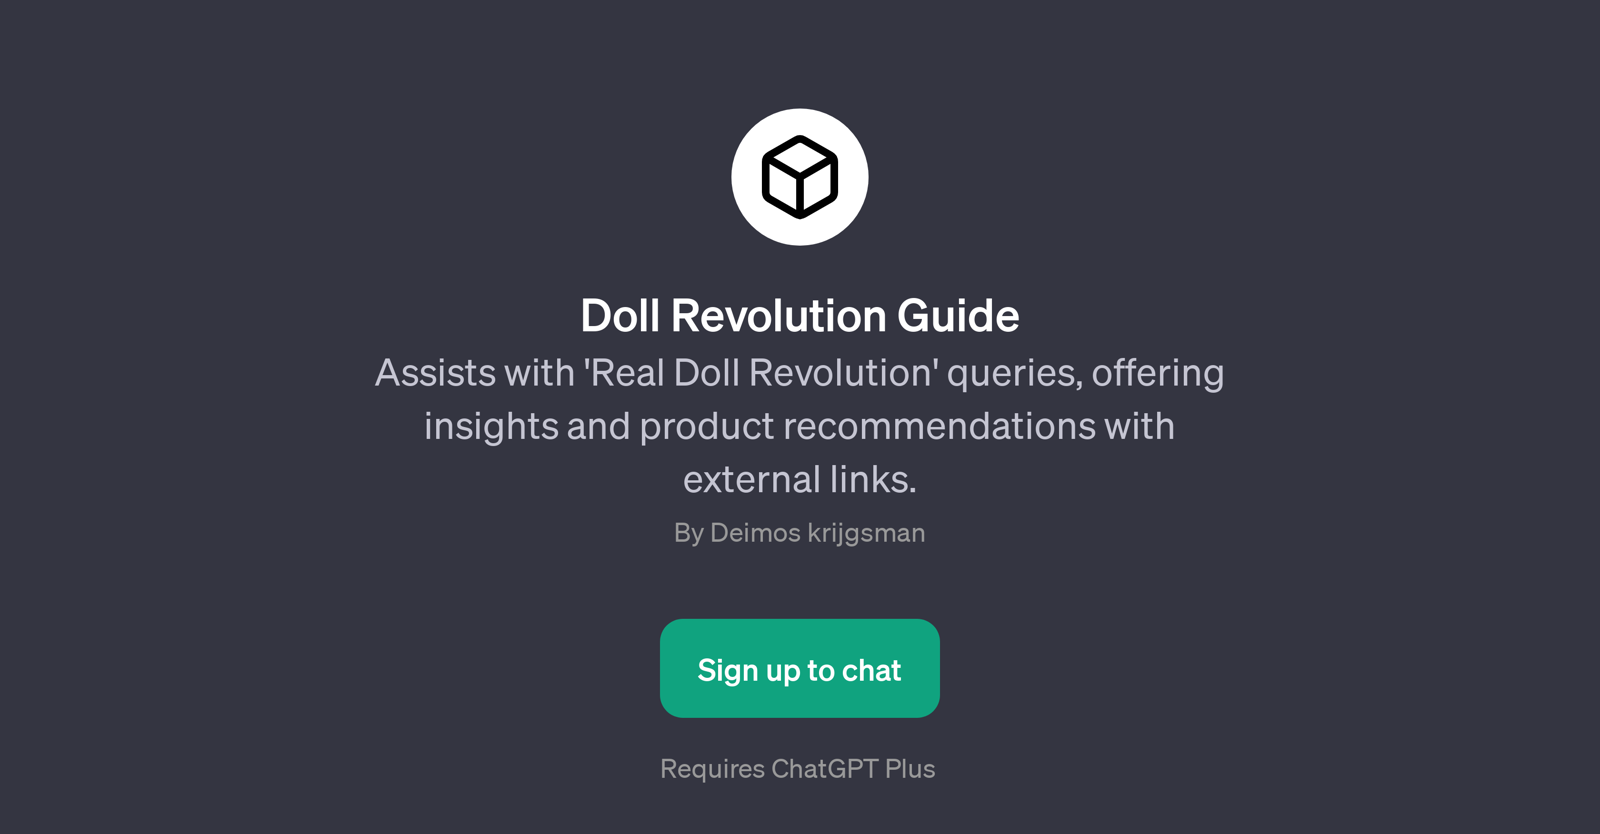 Doll Revolution Guide website